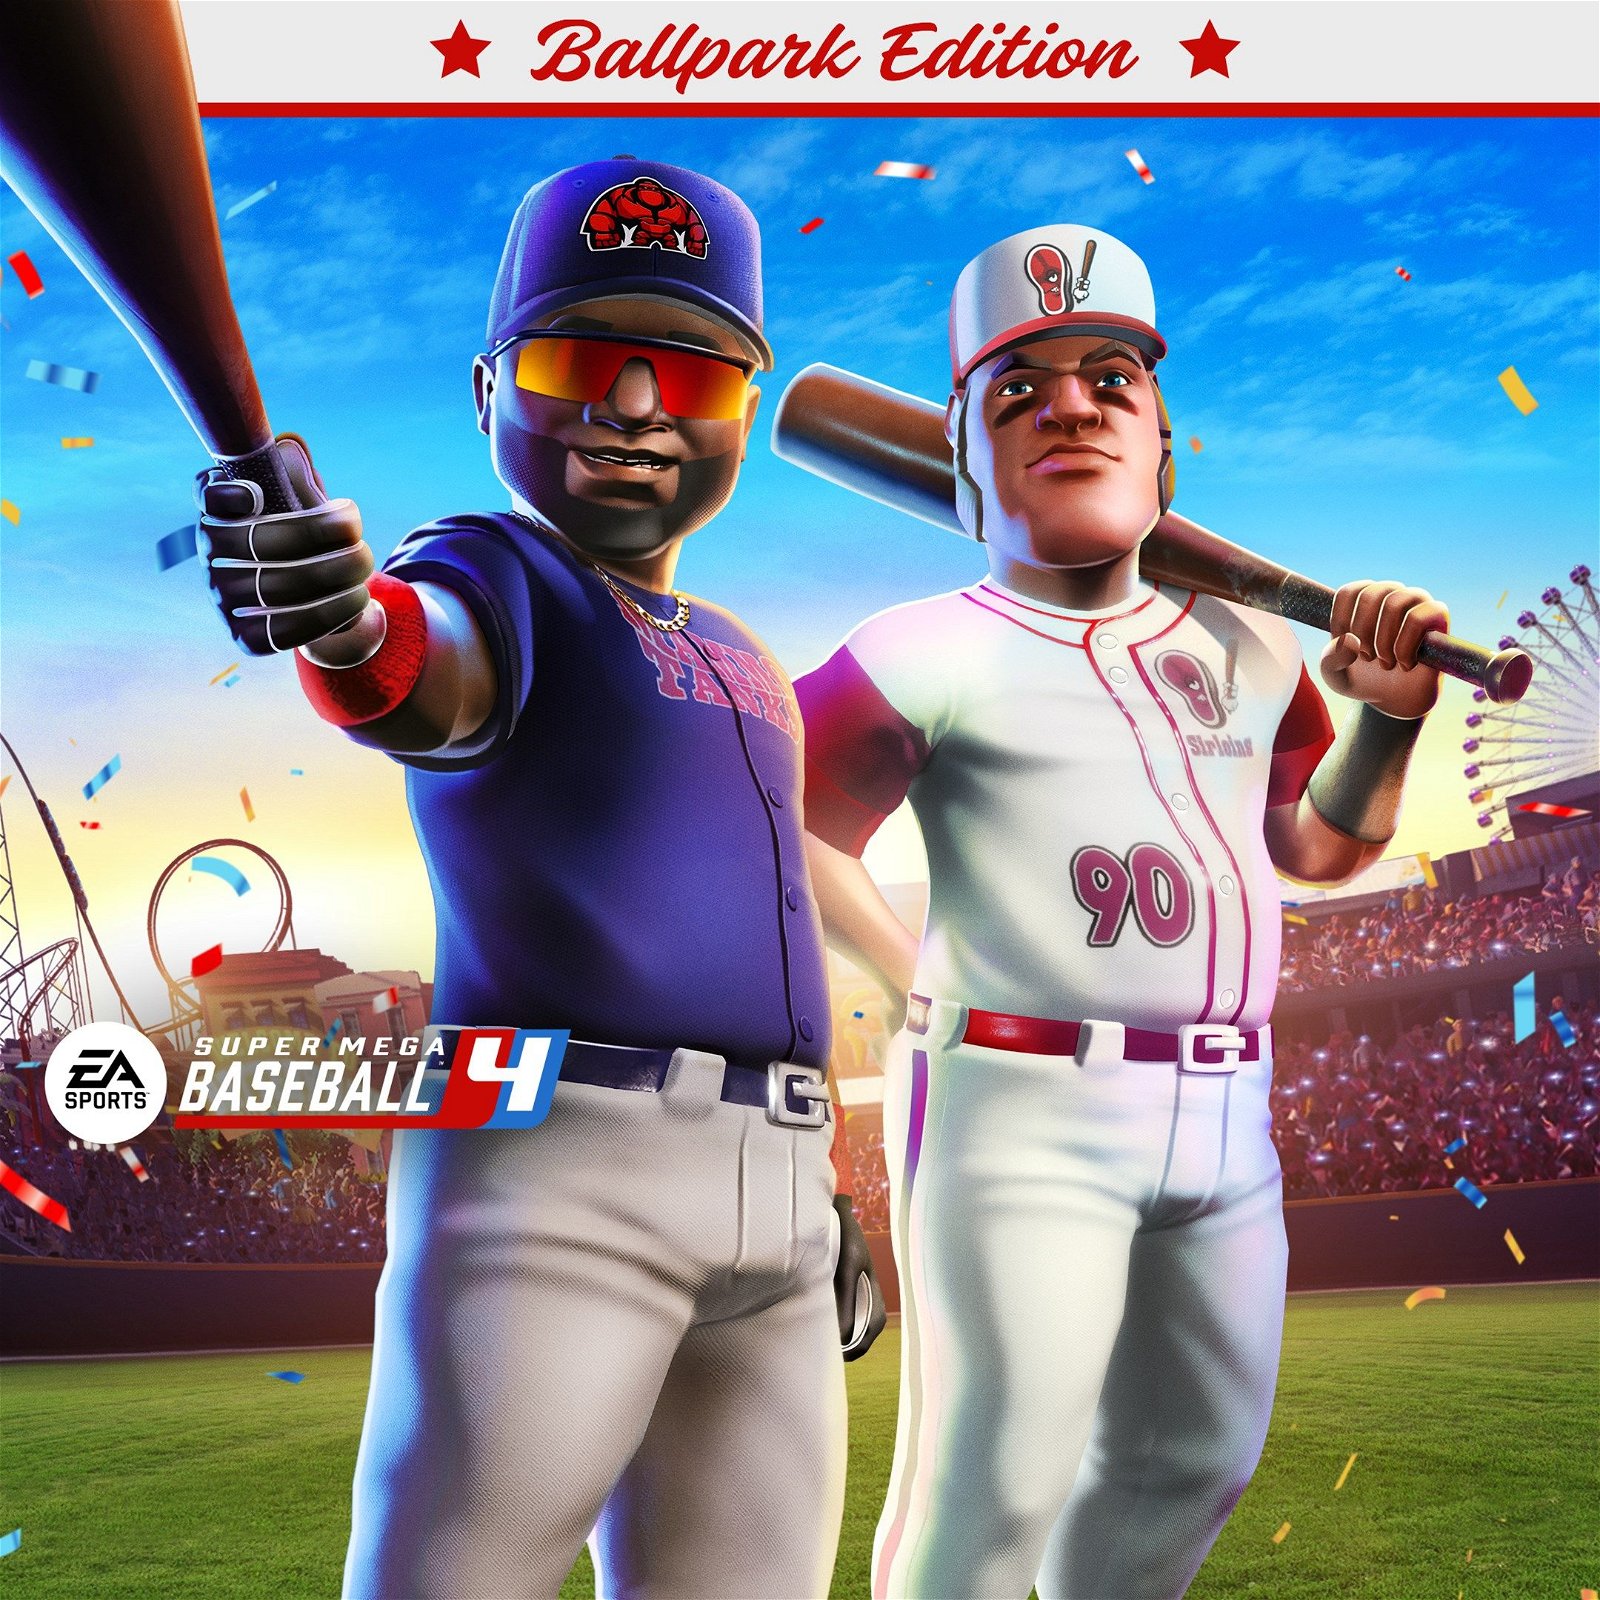 Image of Super Mega Baseball 4 Ballpark Edition